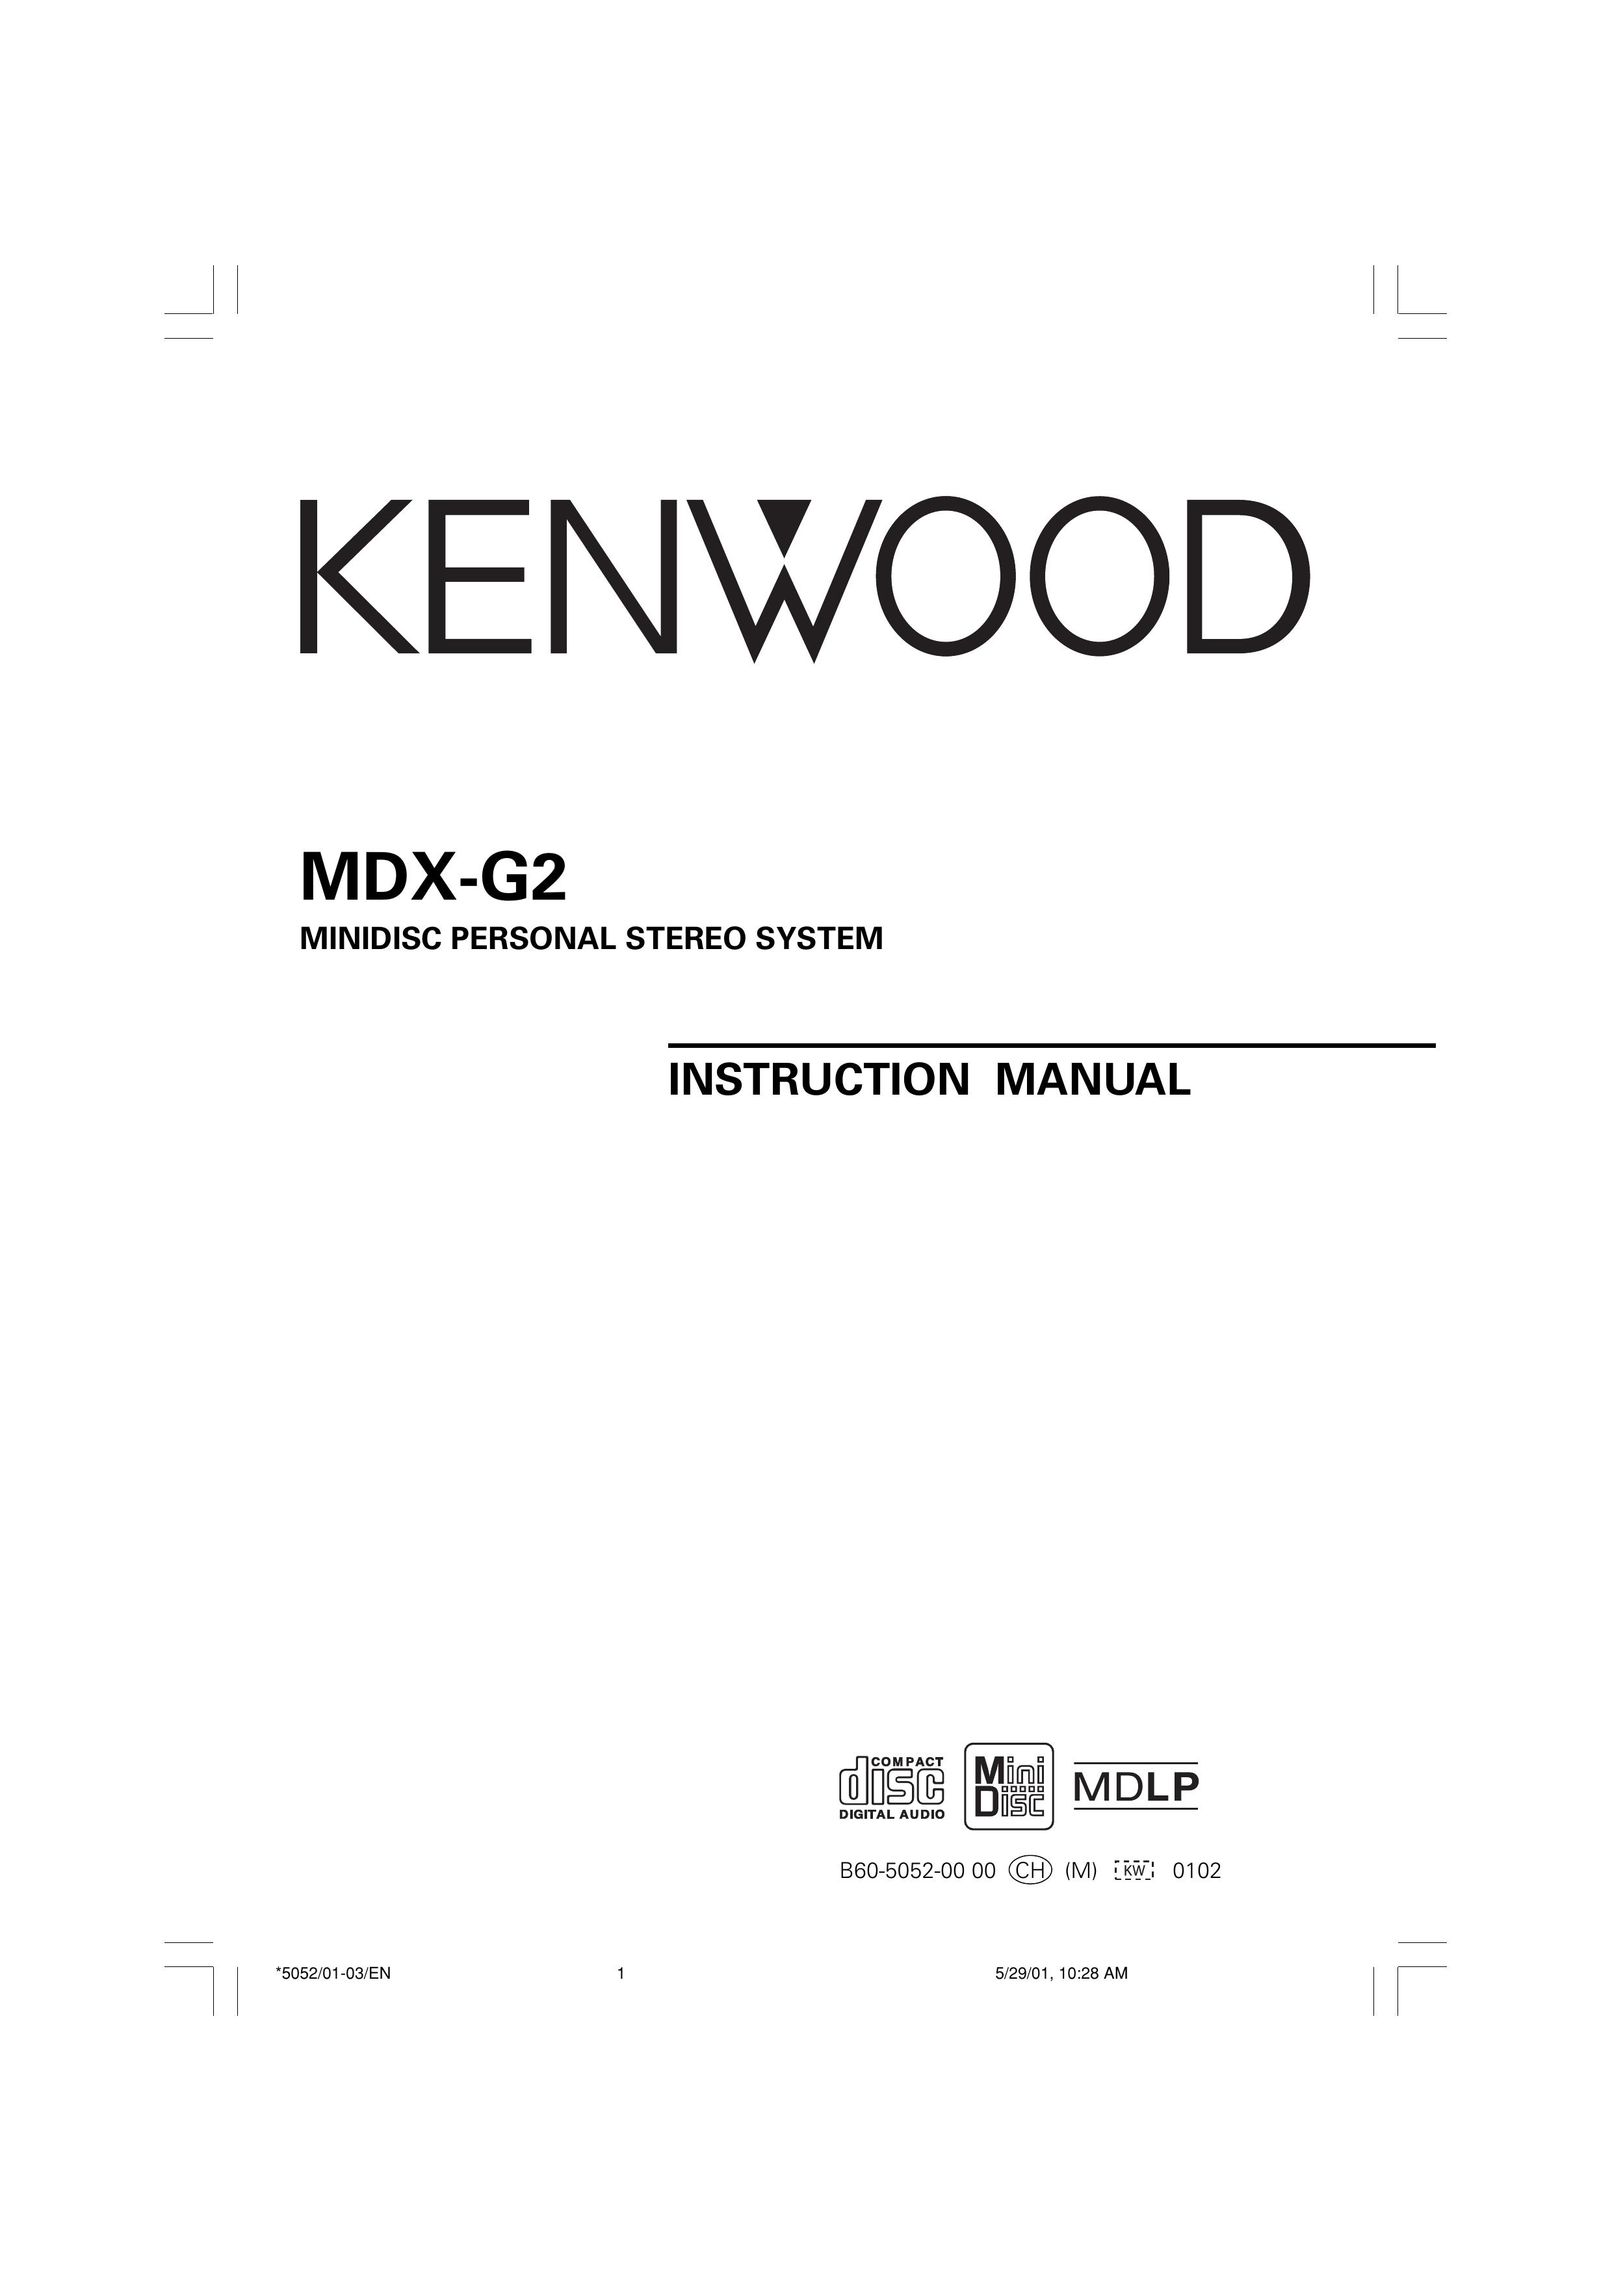 Kenwood MDX-G2 MiniDisc Player User Manual